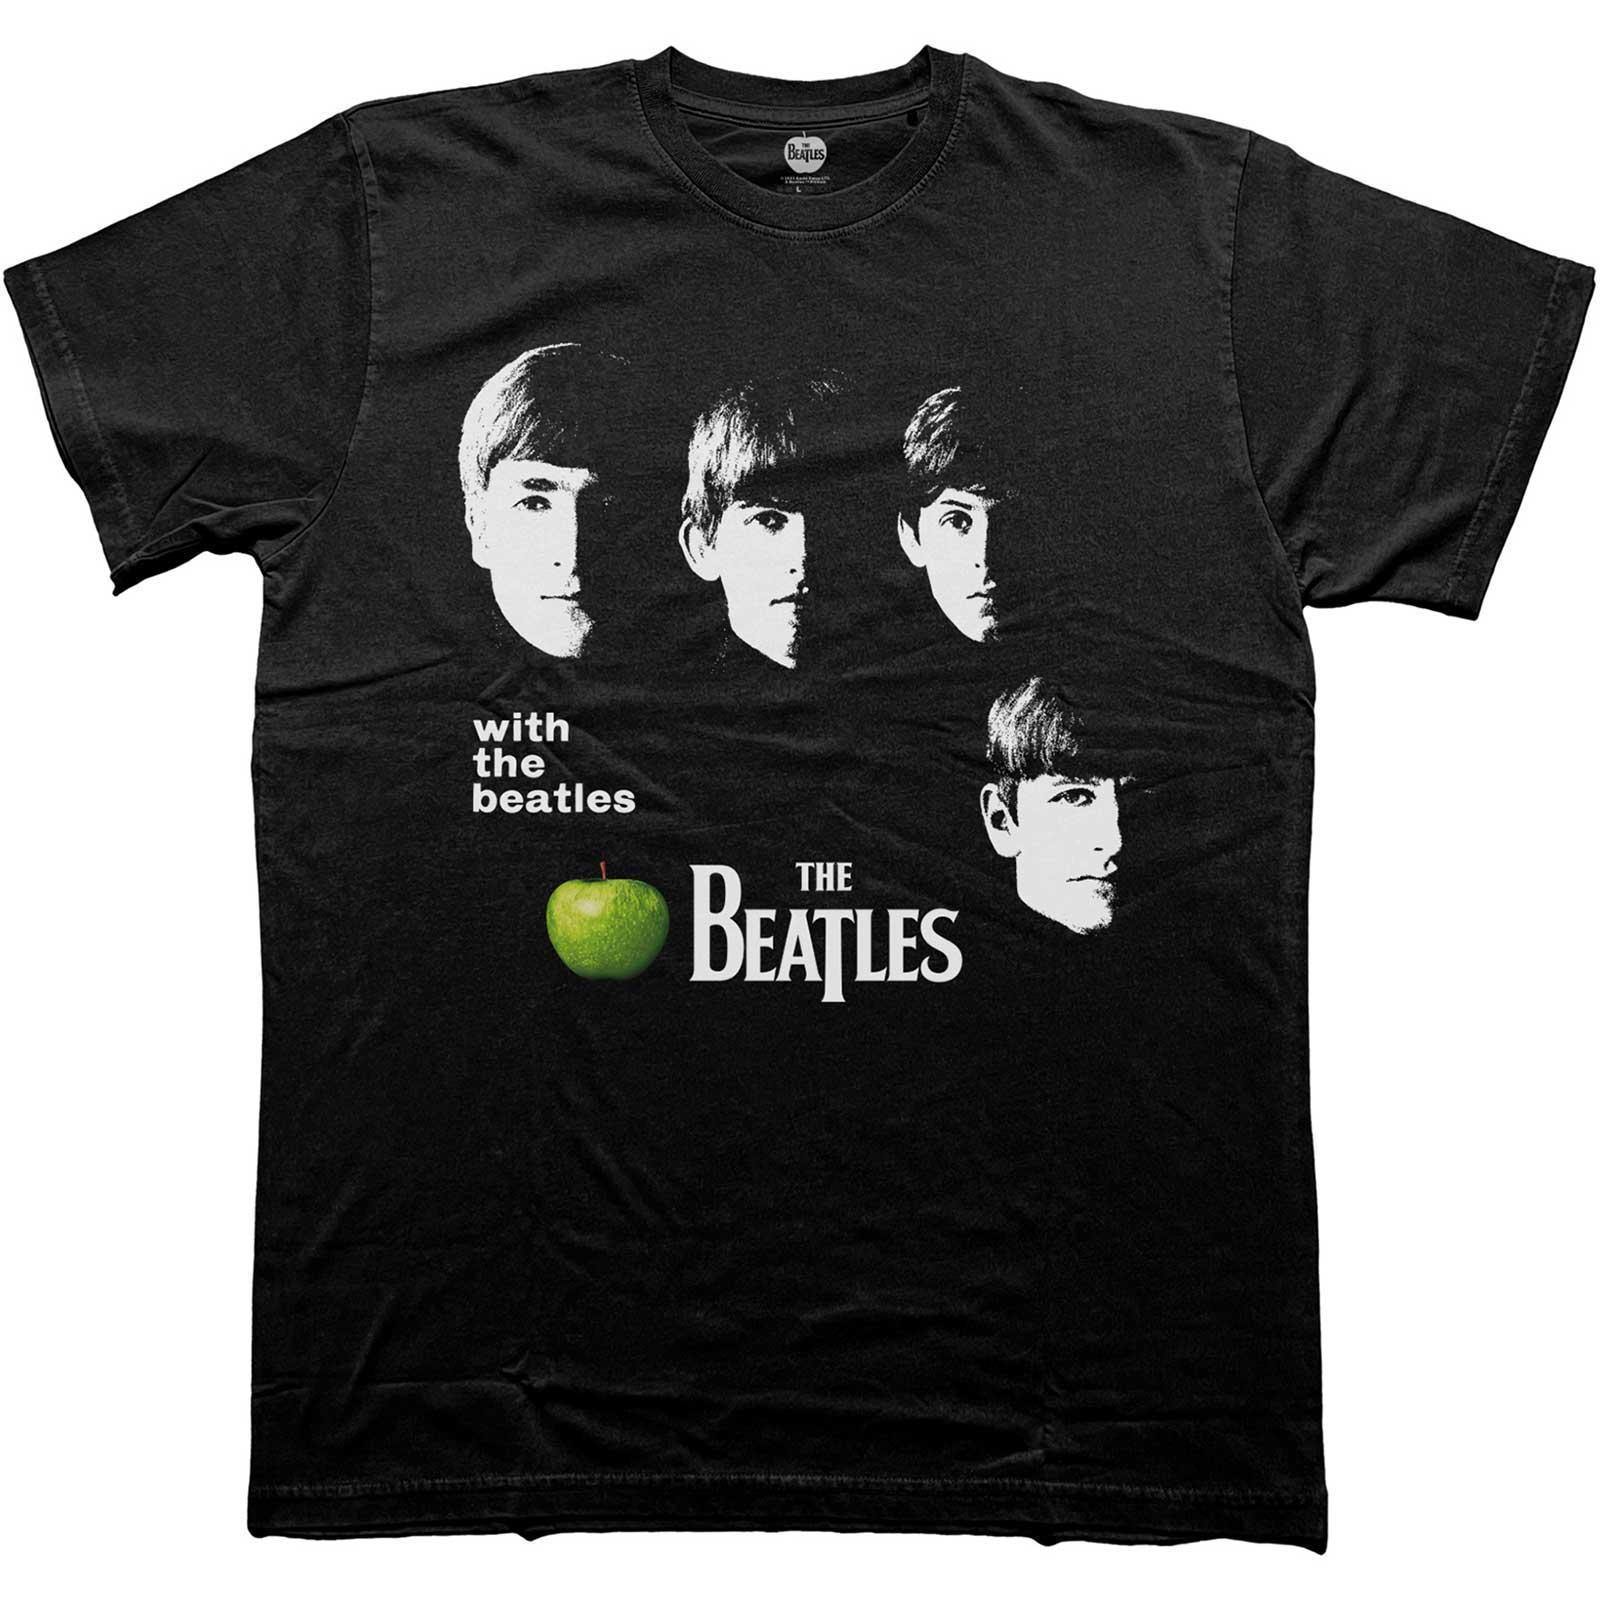 The Beatles Unisex Adult We The Beatles Apple Cotton T-Shirt (Black) (XXL)